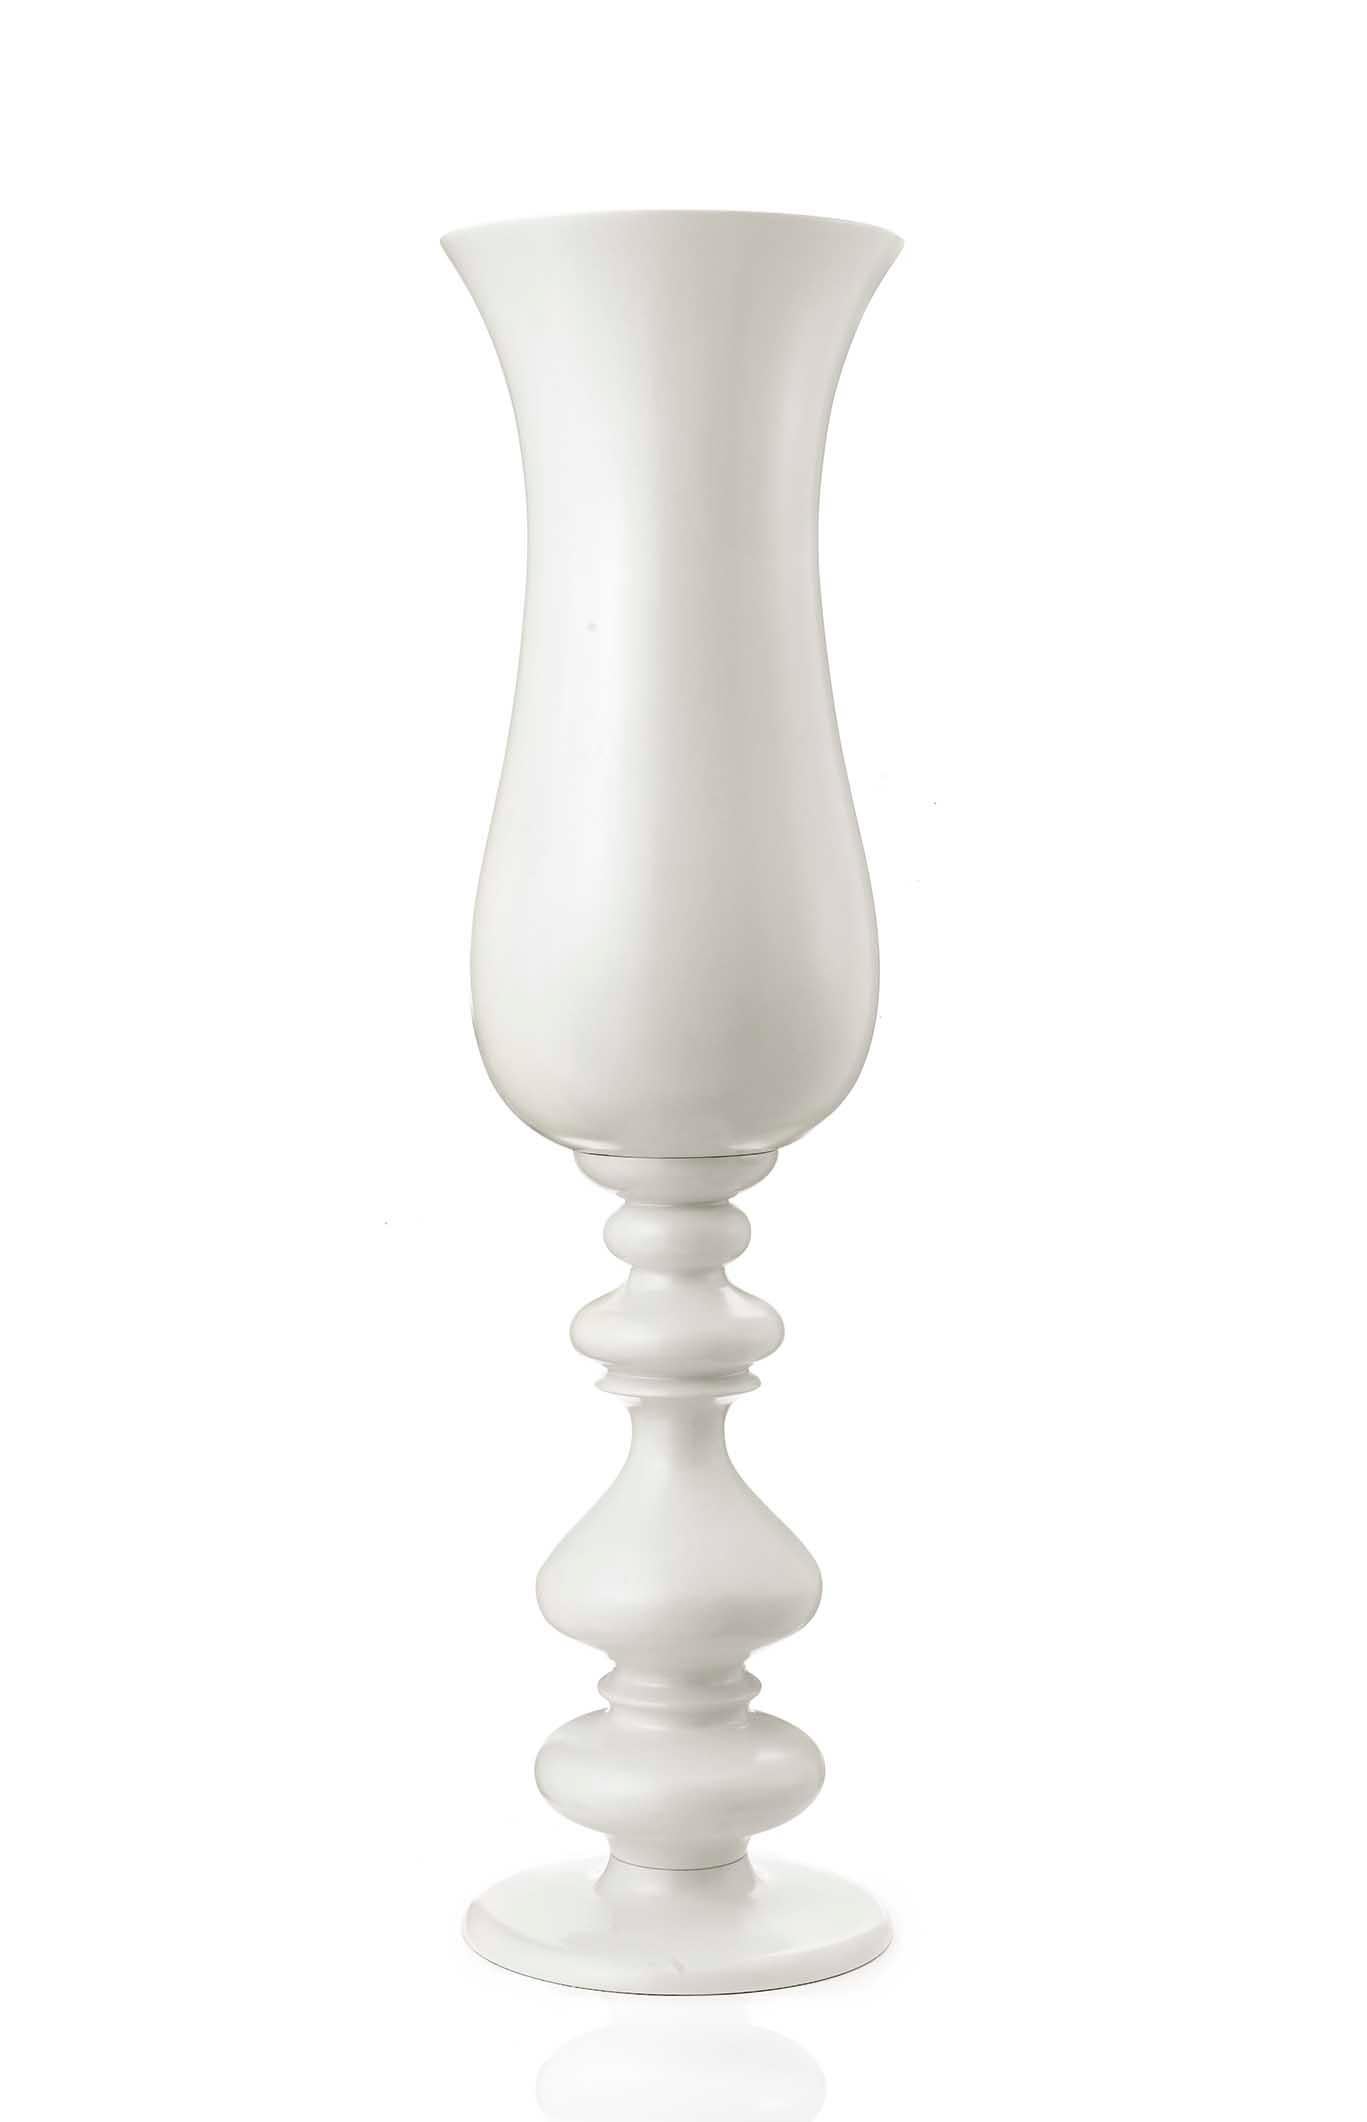 Ceramic vase LOUIS white matte glazed 
cod. CP300

Measures: 
H. 160.0 cm.  Dm. 40.0 cm.